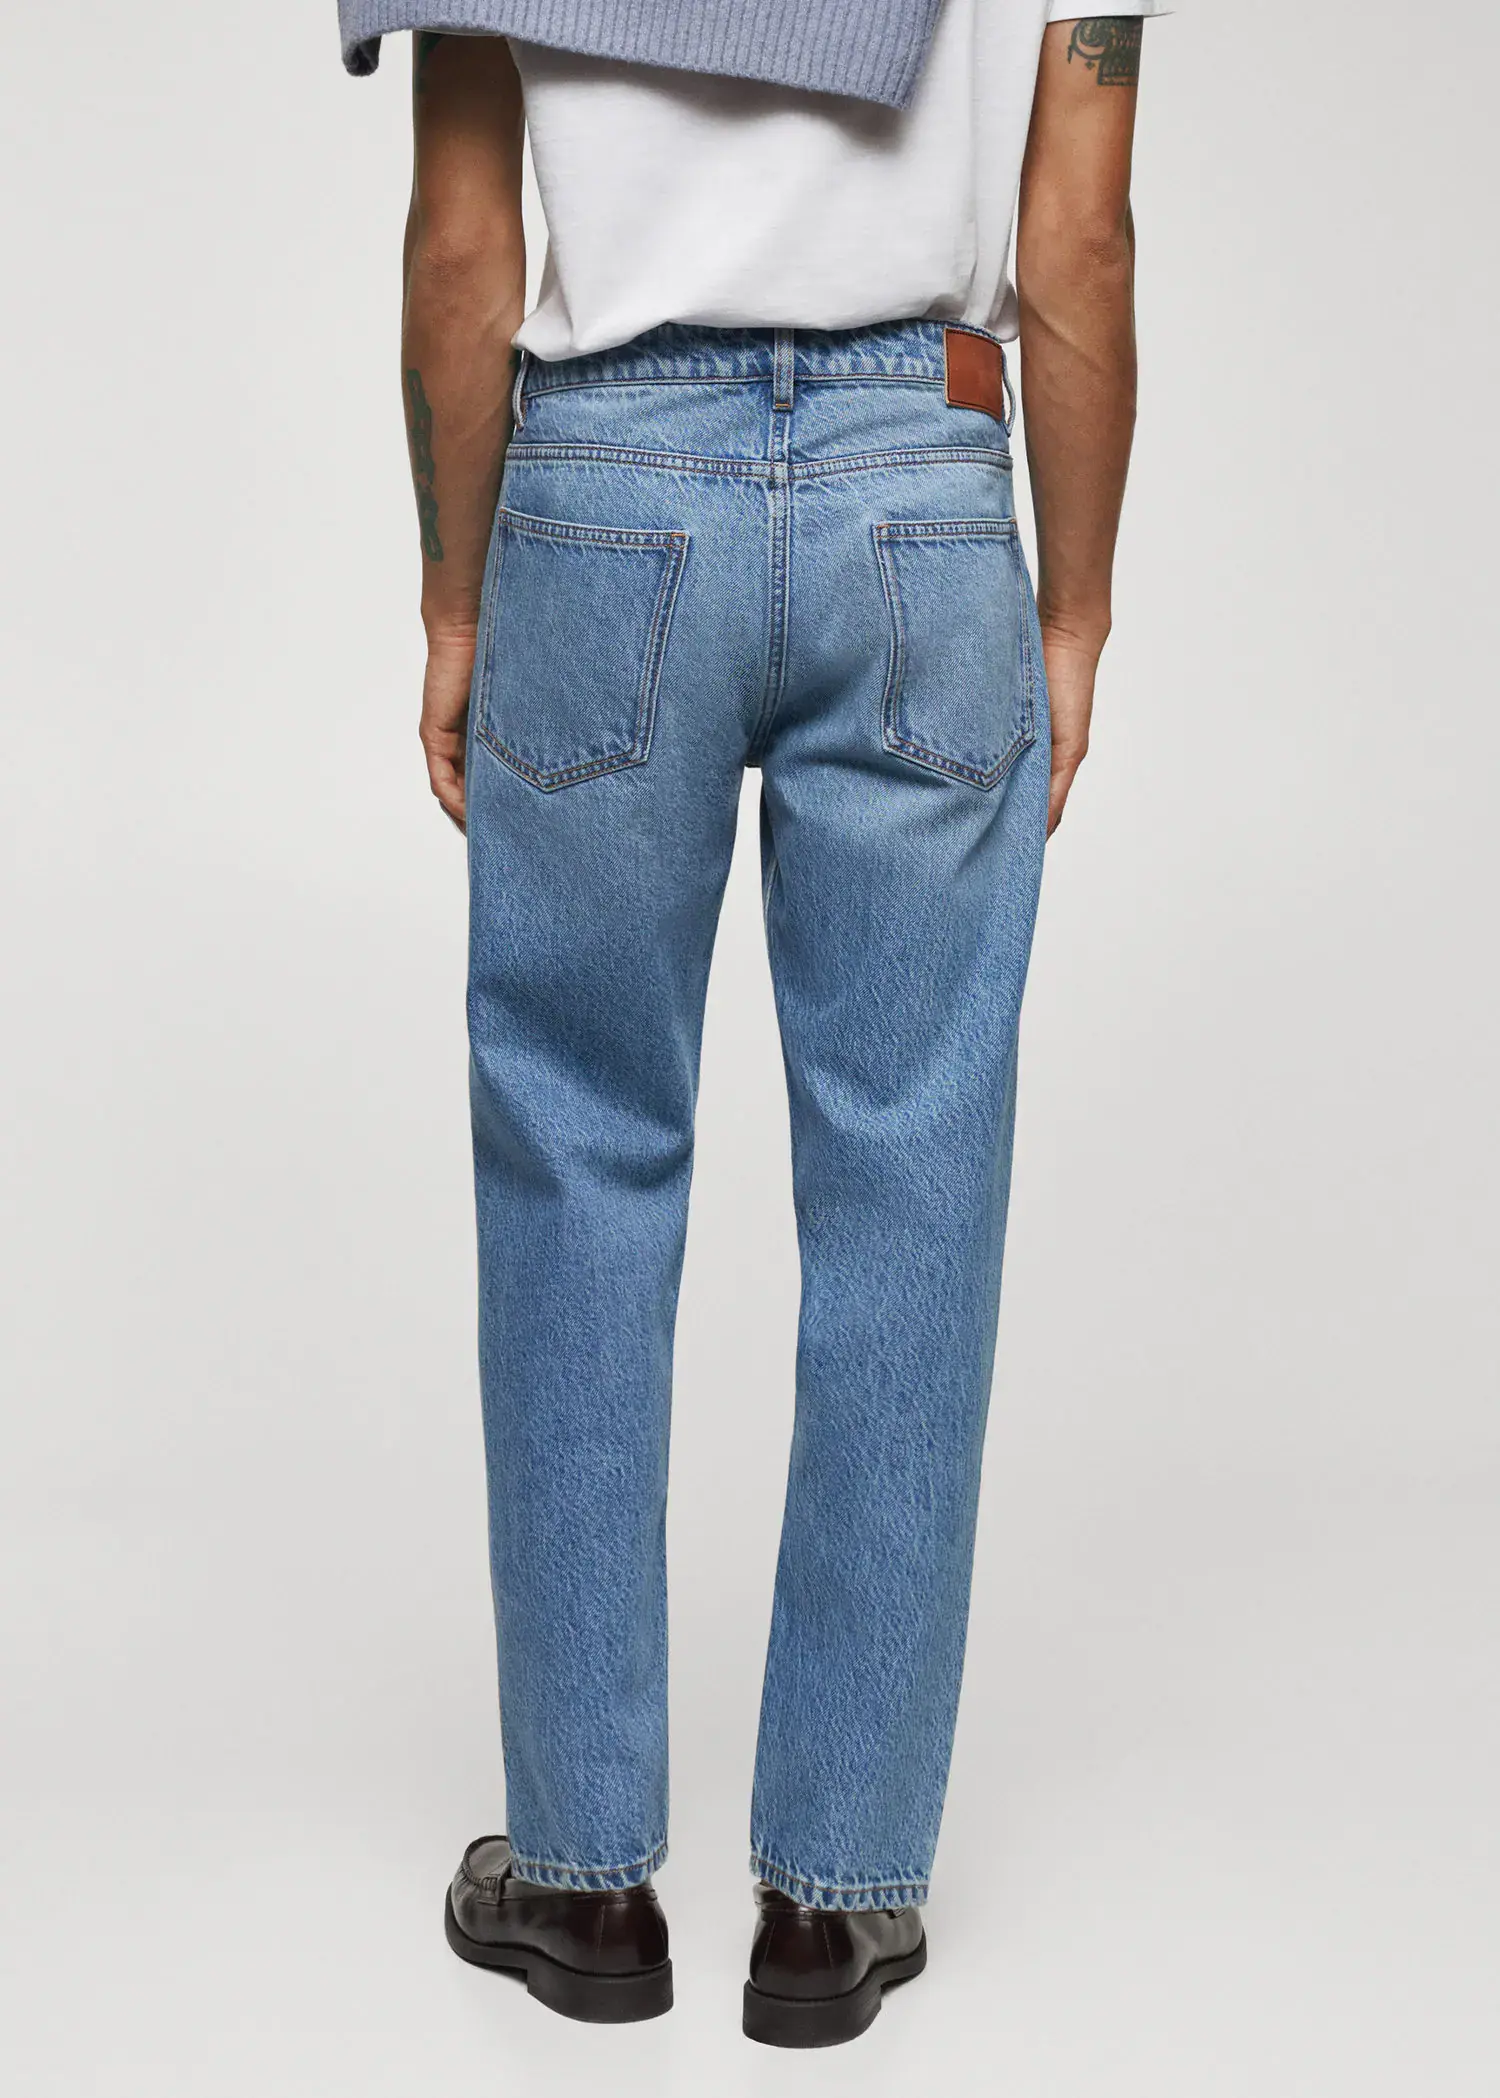 Mango Sam tapper fit jeans. 3